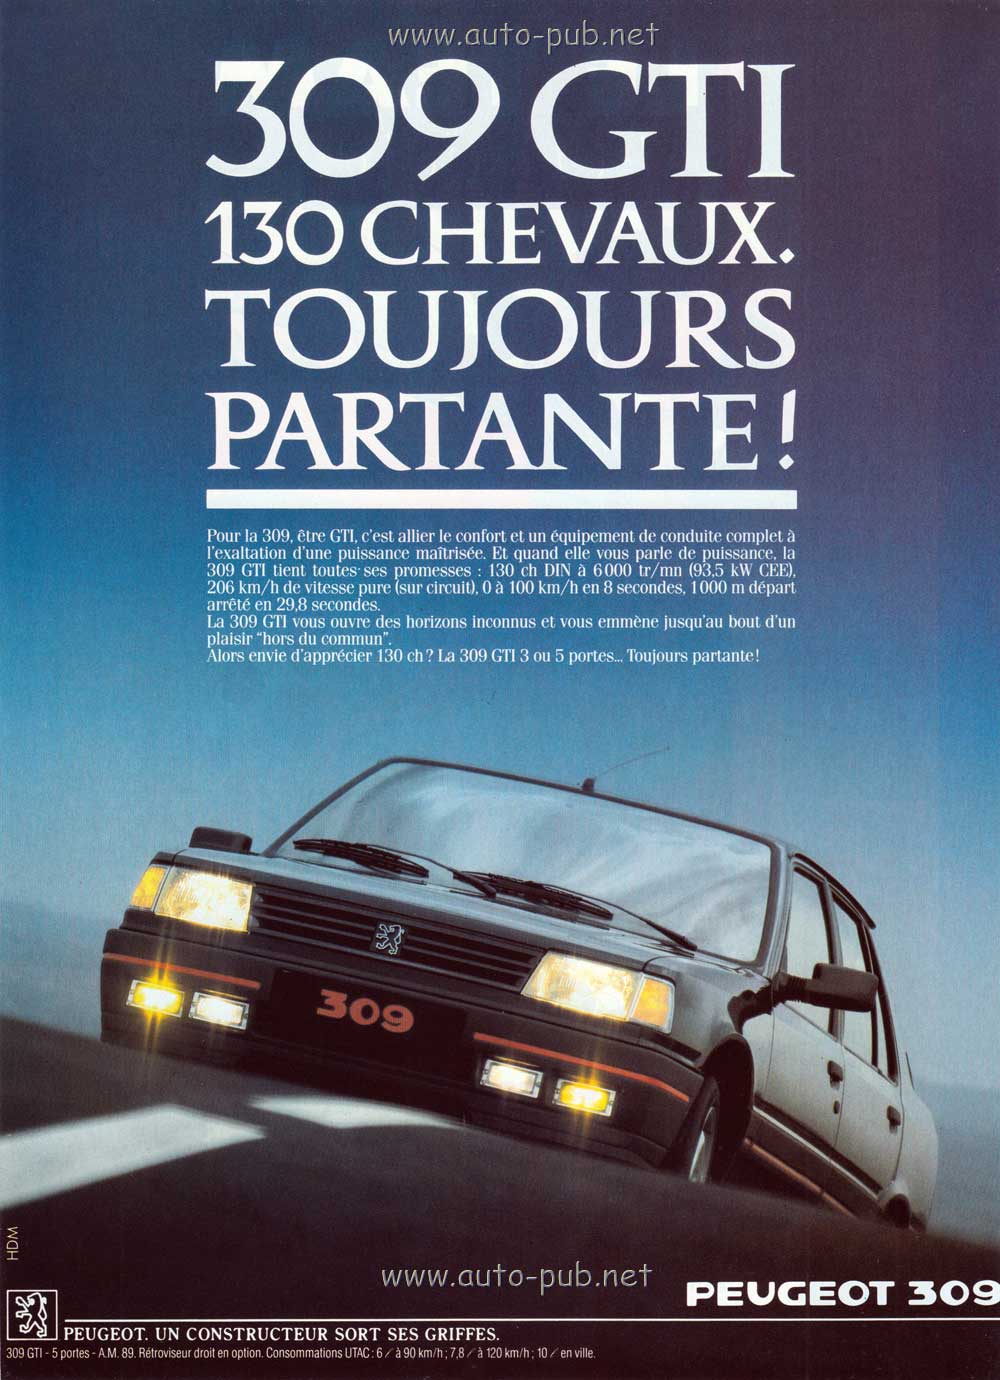 Peugeot-309-GTI-5-portes.jpg